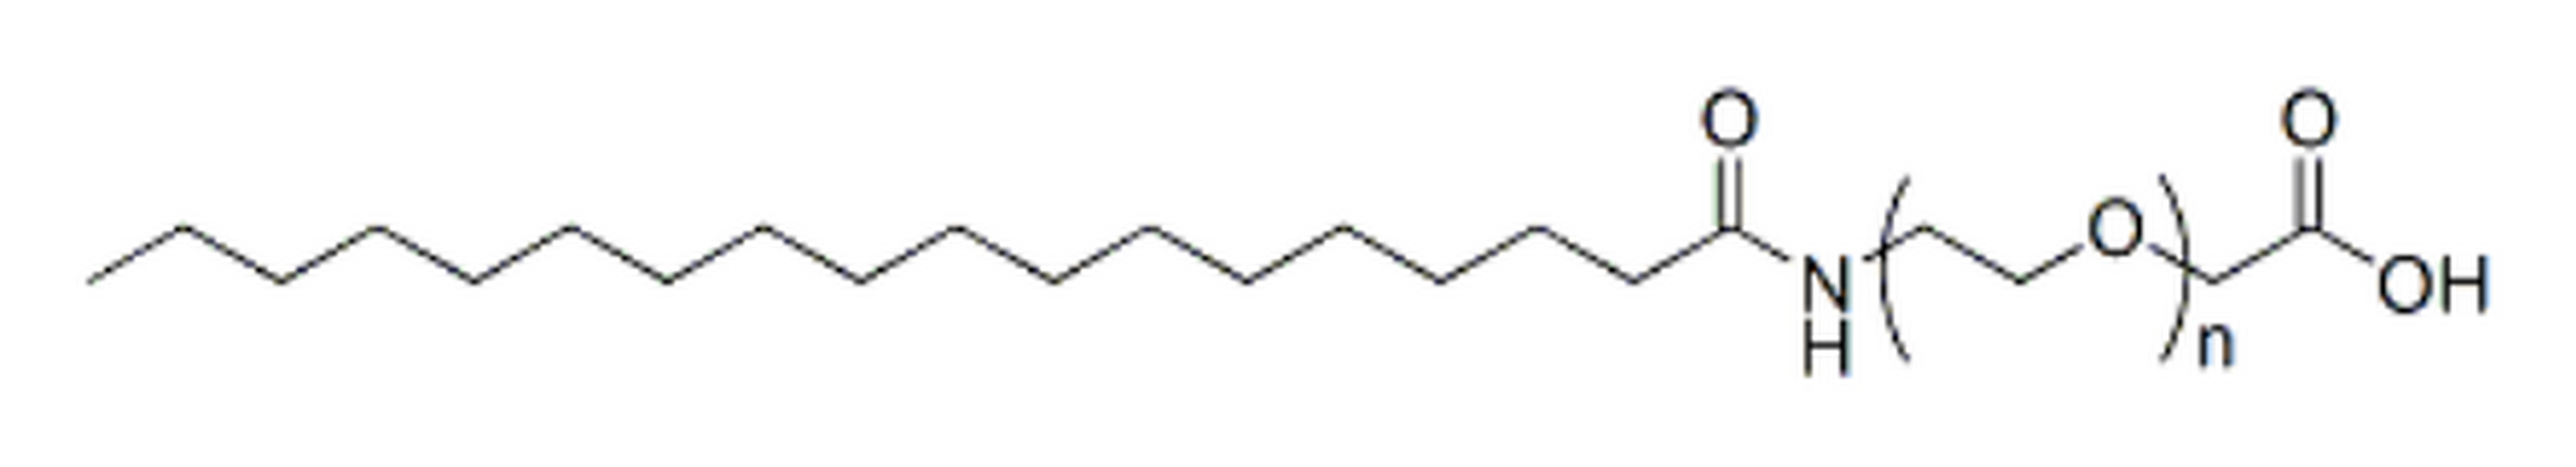 Stearic acid-PEG-CH2CO2H, MW 1K